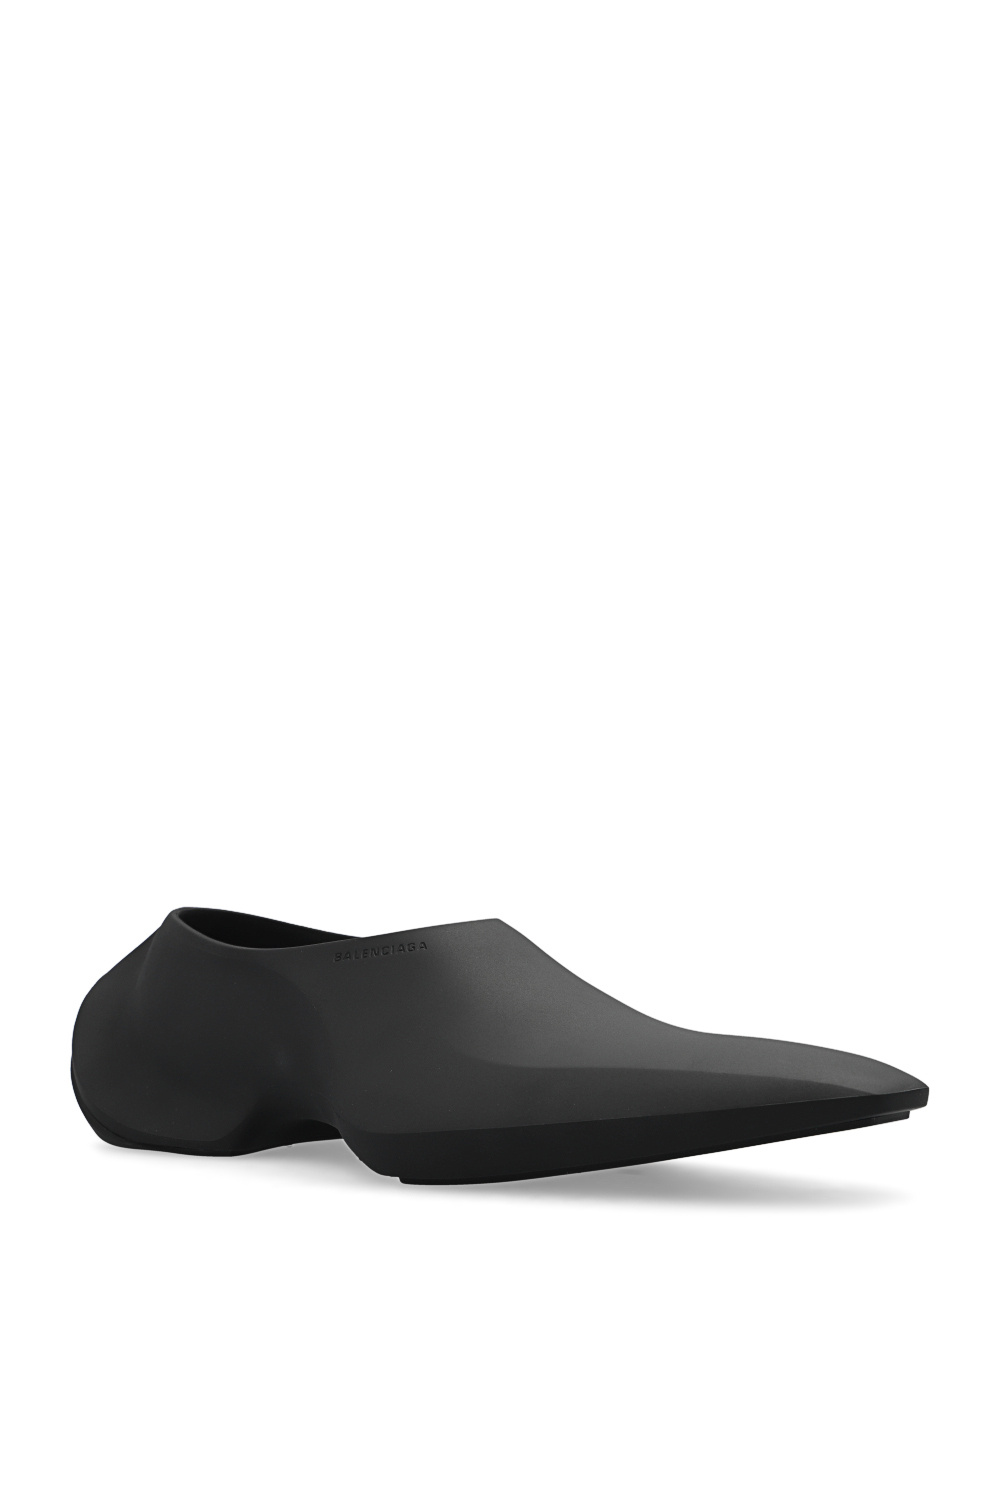 VbjdevelopmentsShops LC - 'Space' shoes Balenciaga - Air Jordan 